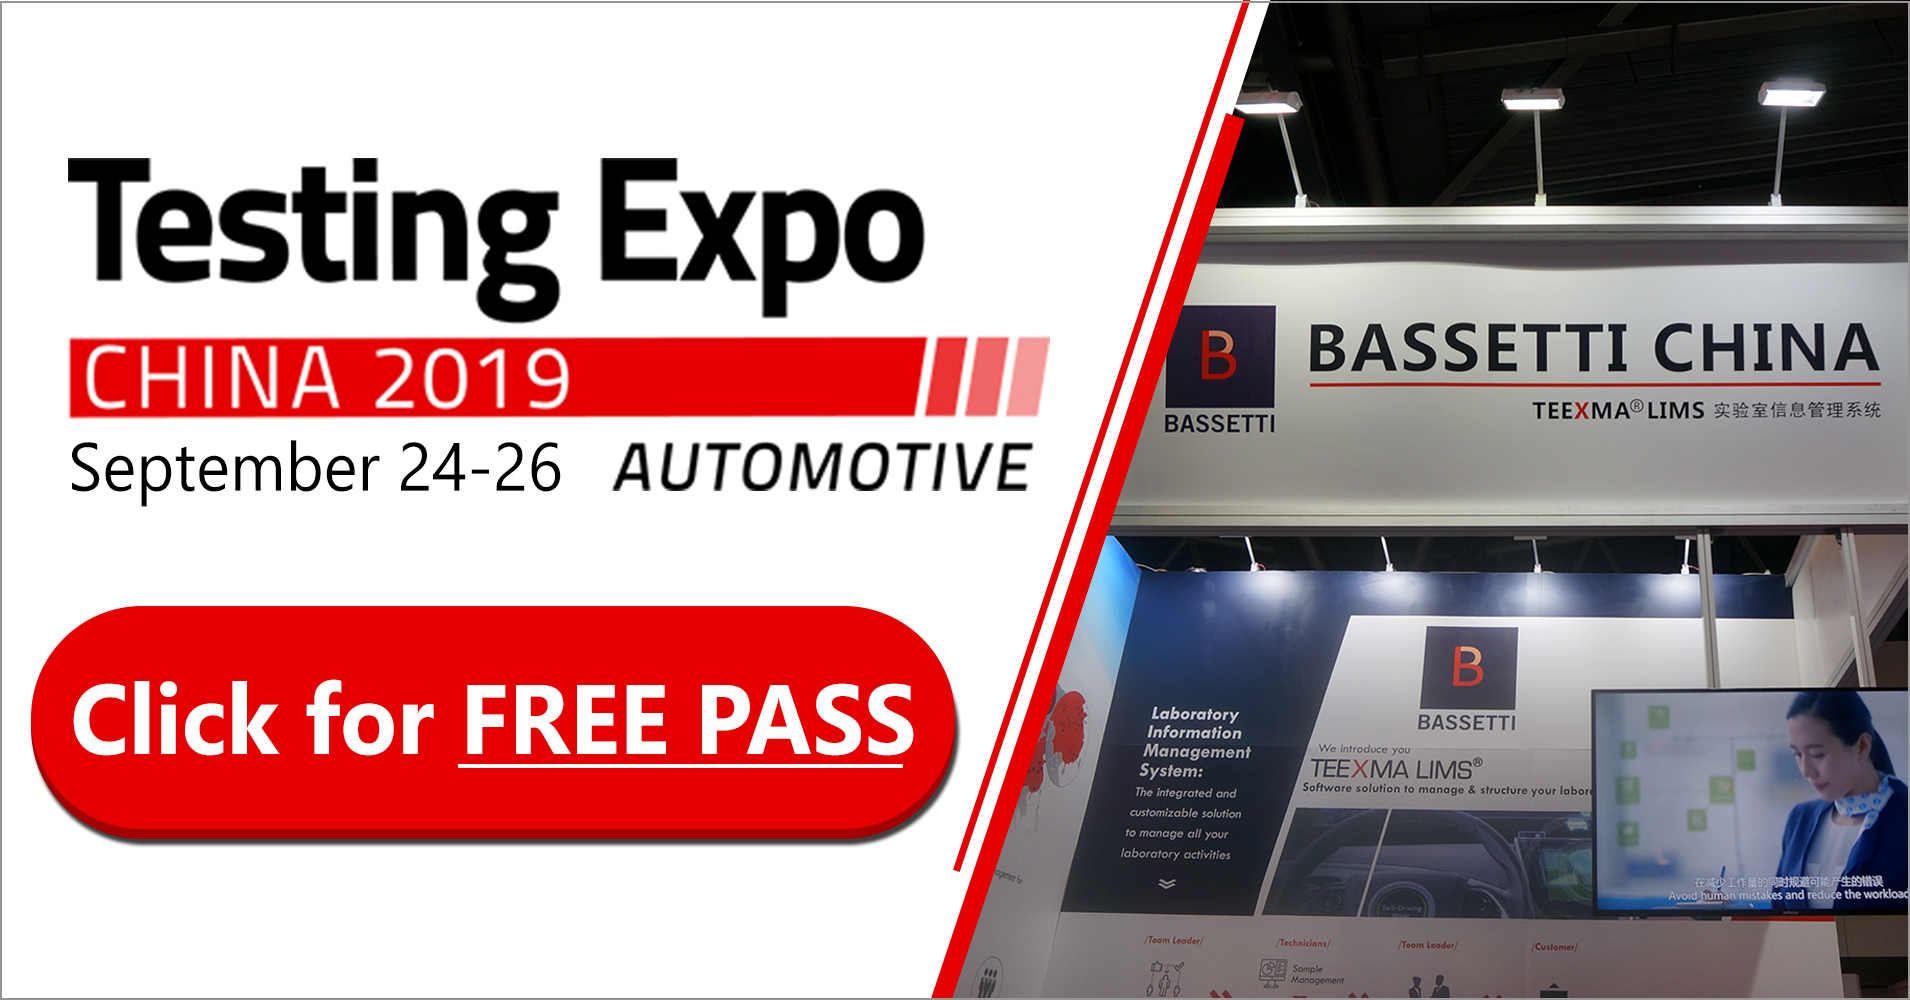 2019 Automotive Testing Expo China Registration.jpg